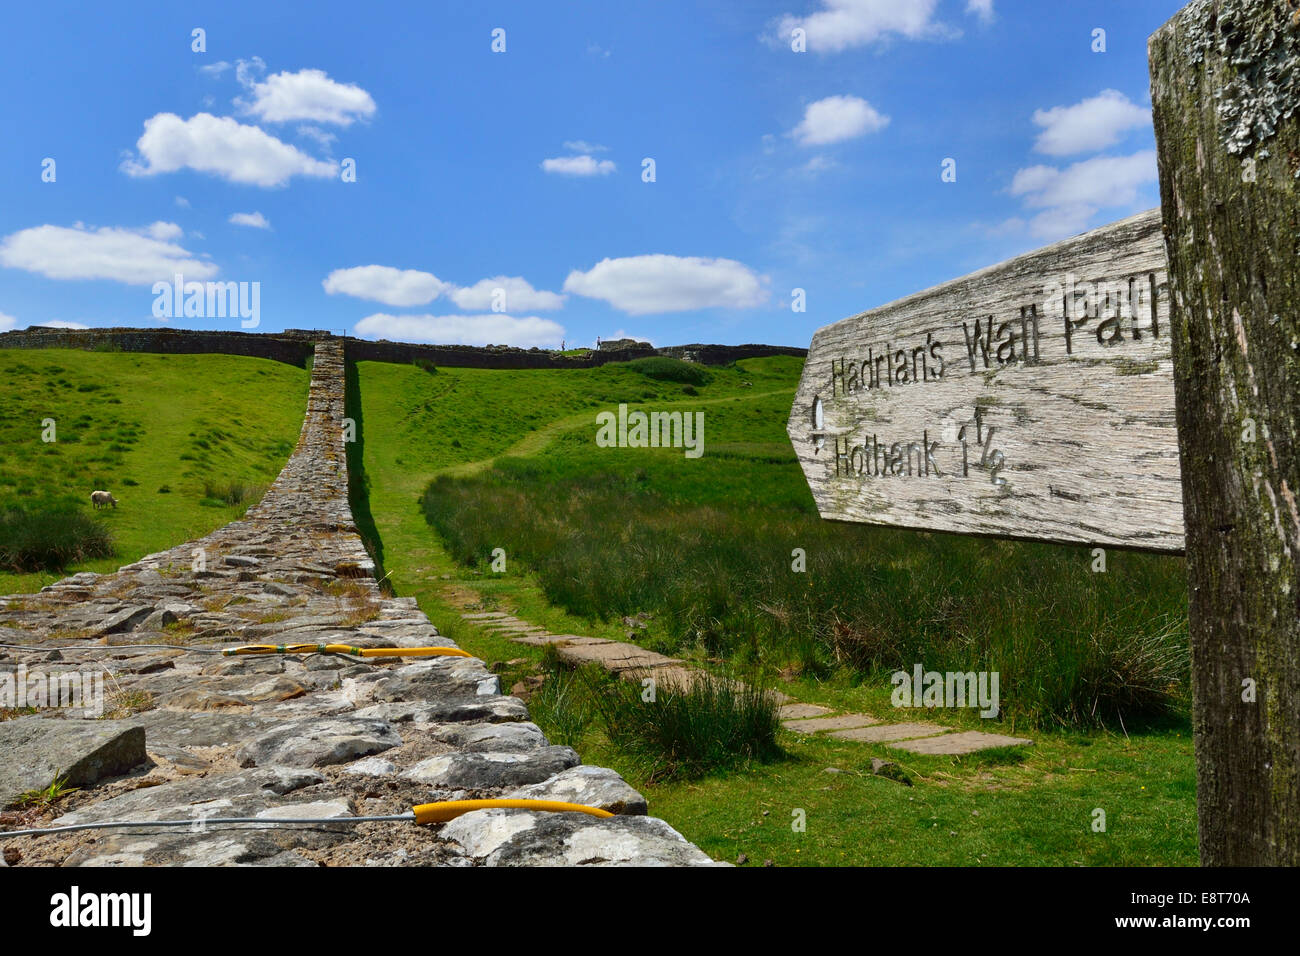 Hadrian's Wall meandering through the landscape, Housesteads Roman Fort, Haydon Bridge, Hexham, Northumberland, England Stock Photo